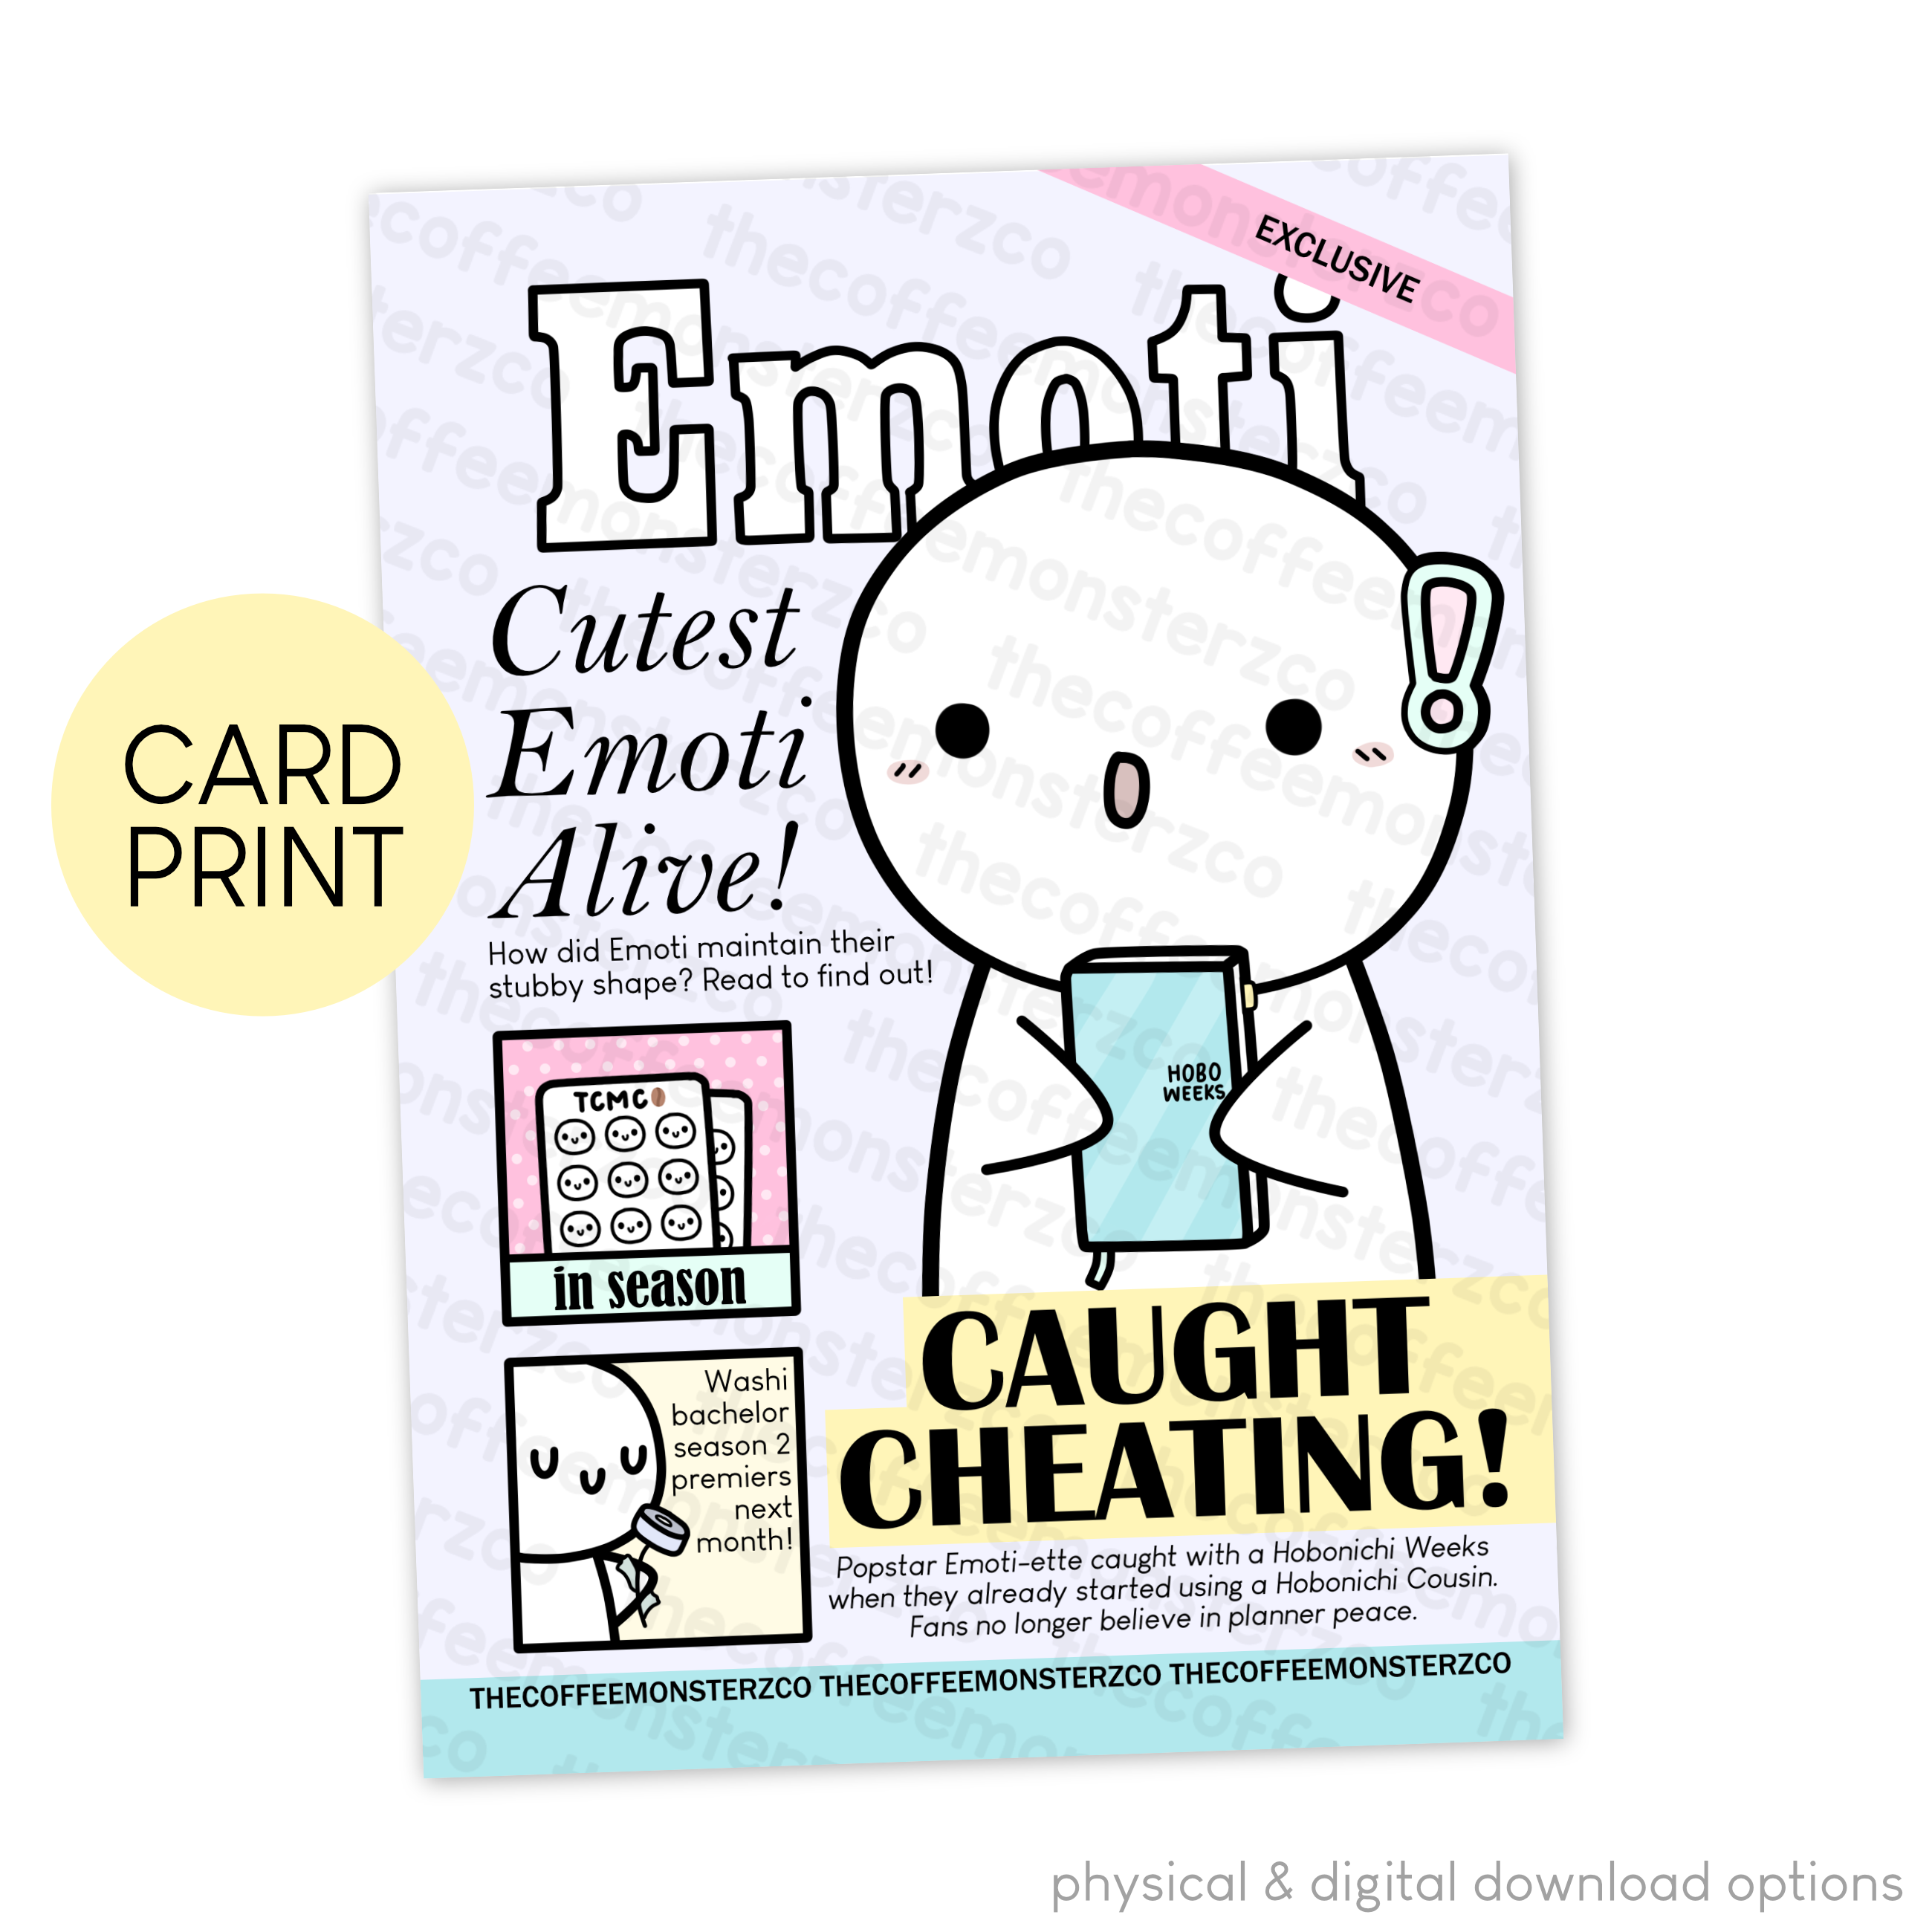 Emoti Magazine - Card Print